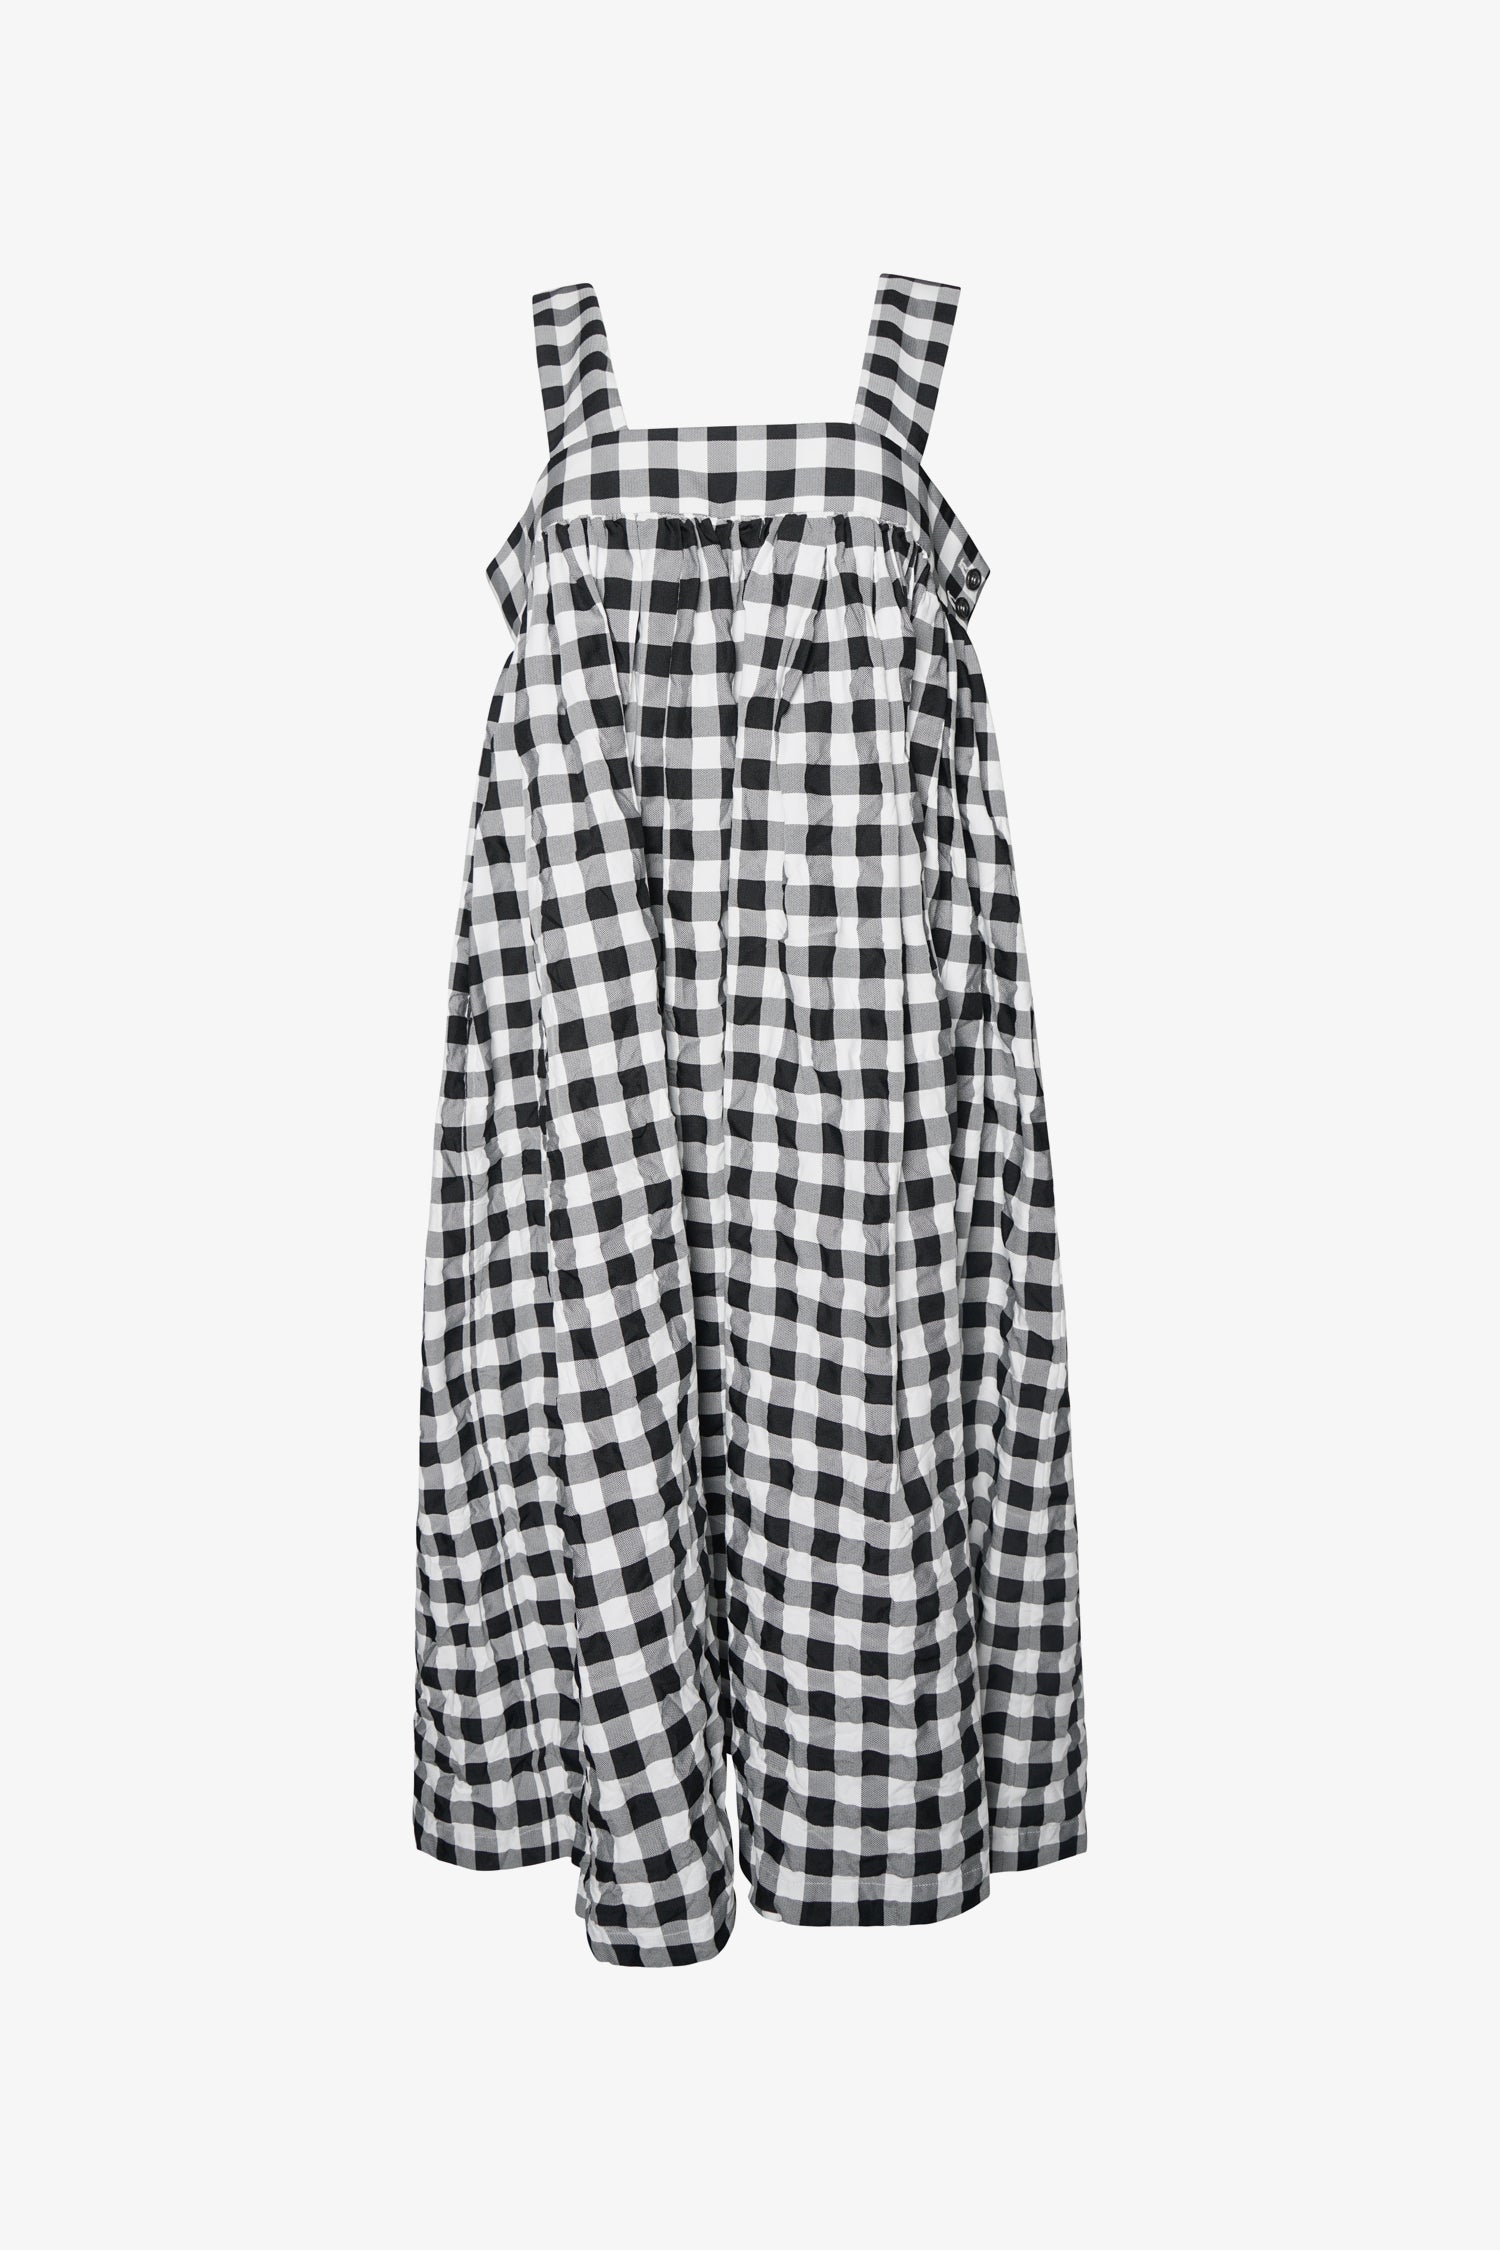 Selectshop FRAME - COMME DES GARÇONS GIRL Gingham Check Pattern Jumper Dress Bottoms Dubai